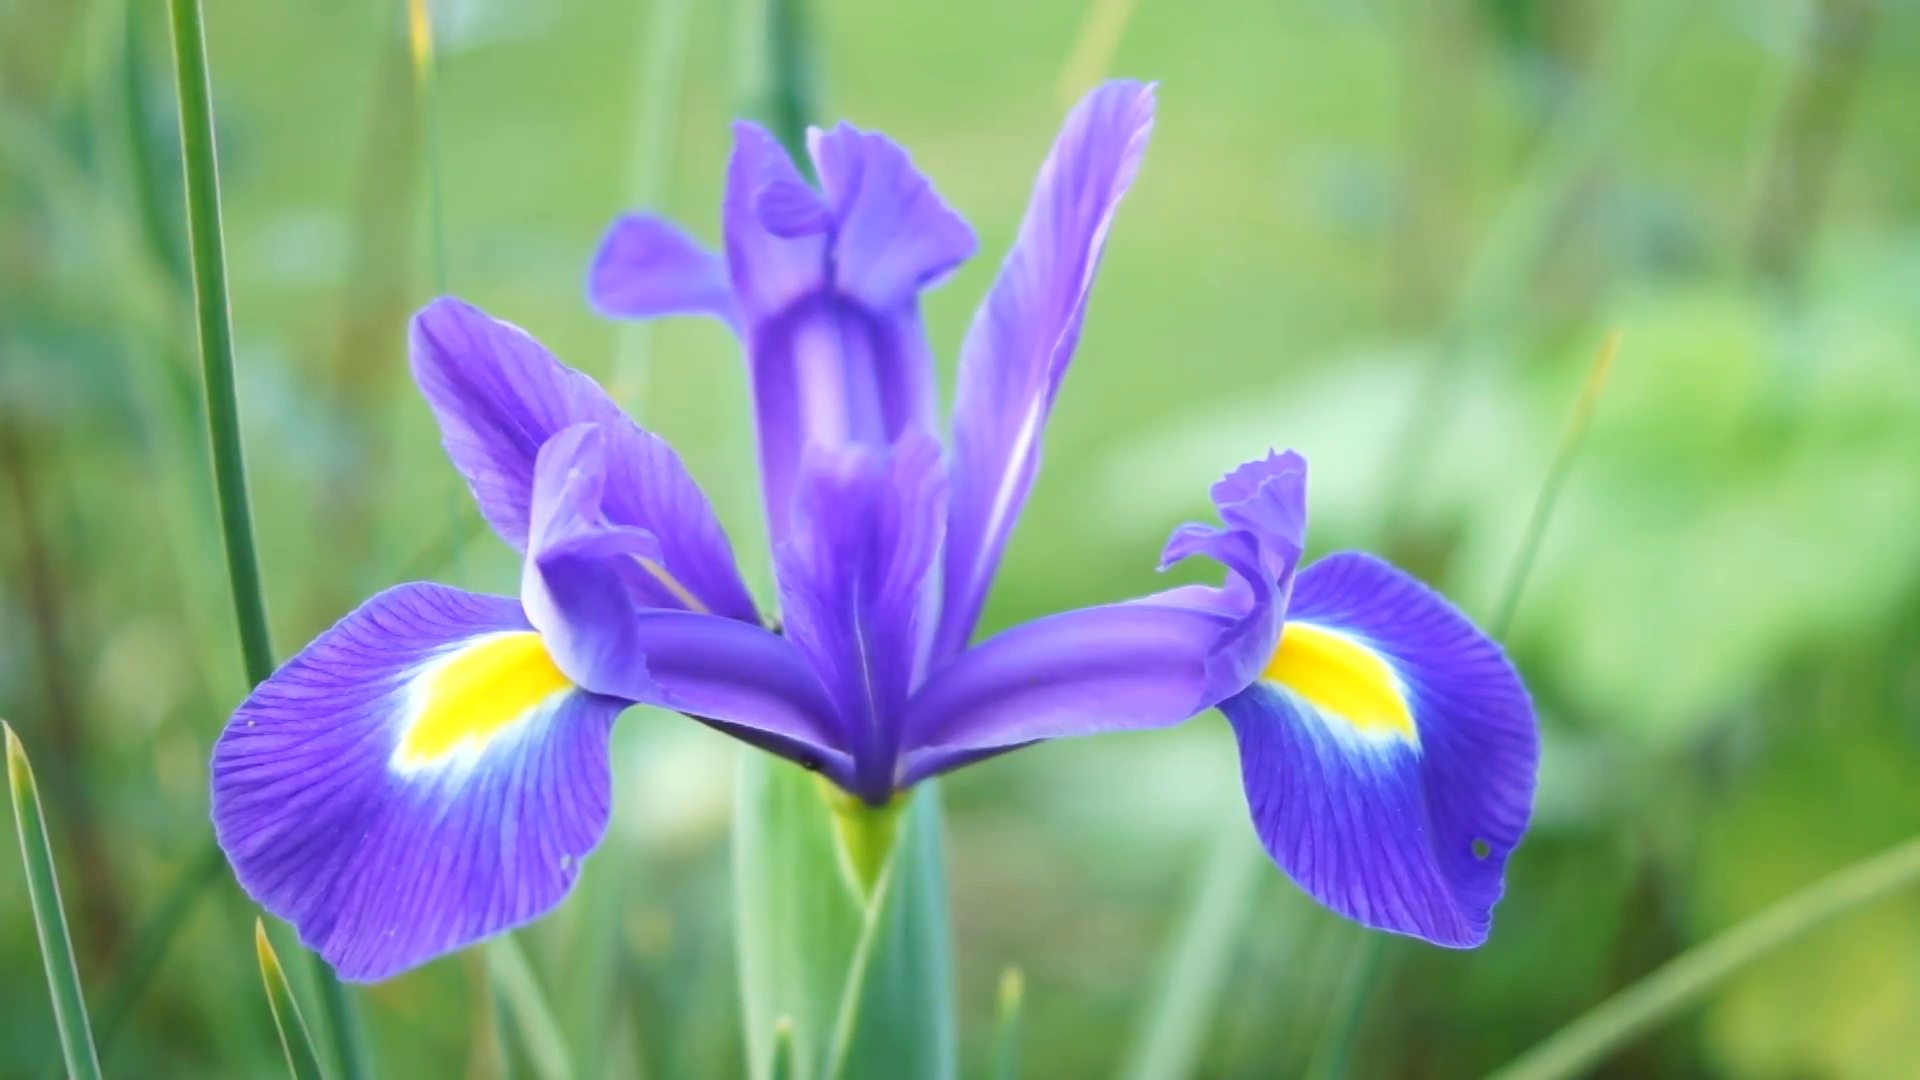 Blue Iris Flower in Spring Stock Video Footage - VideoBlocks